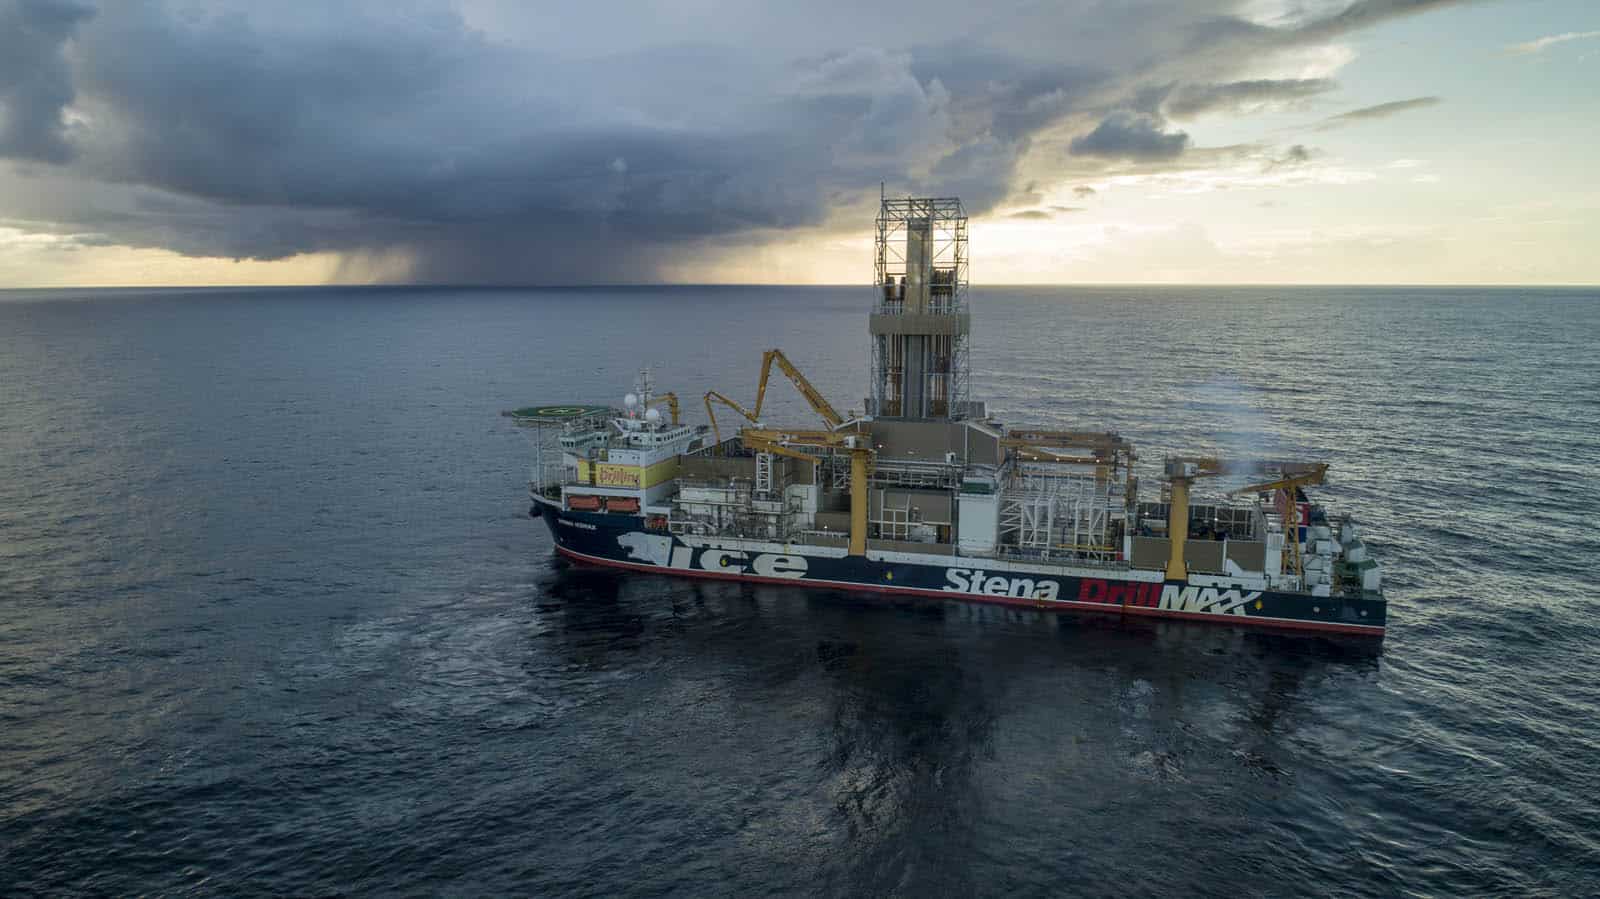 Stena drillmax drillship in the sea with thick cloud and rain